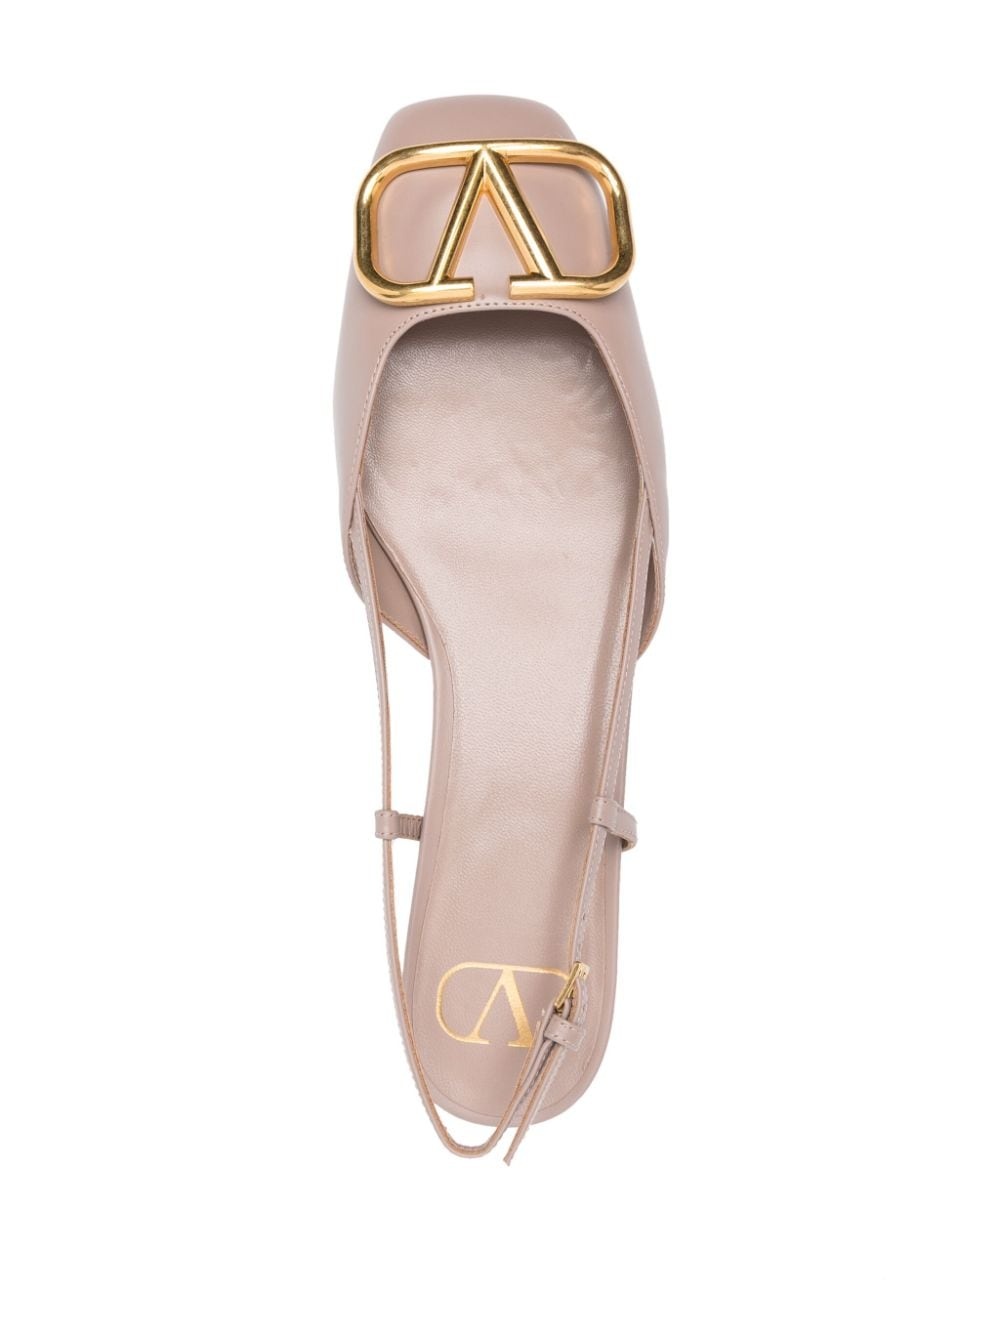 VLogo leather ballerina shoes - 4